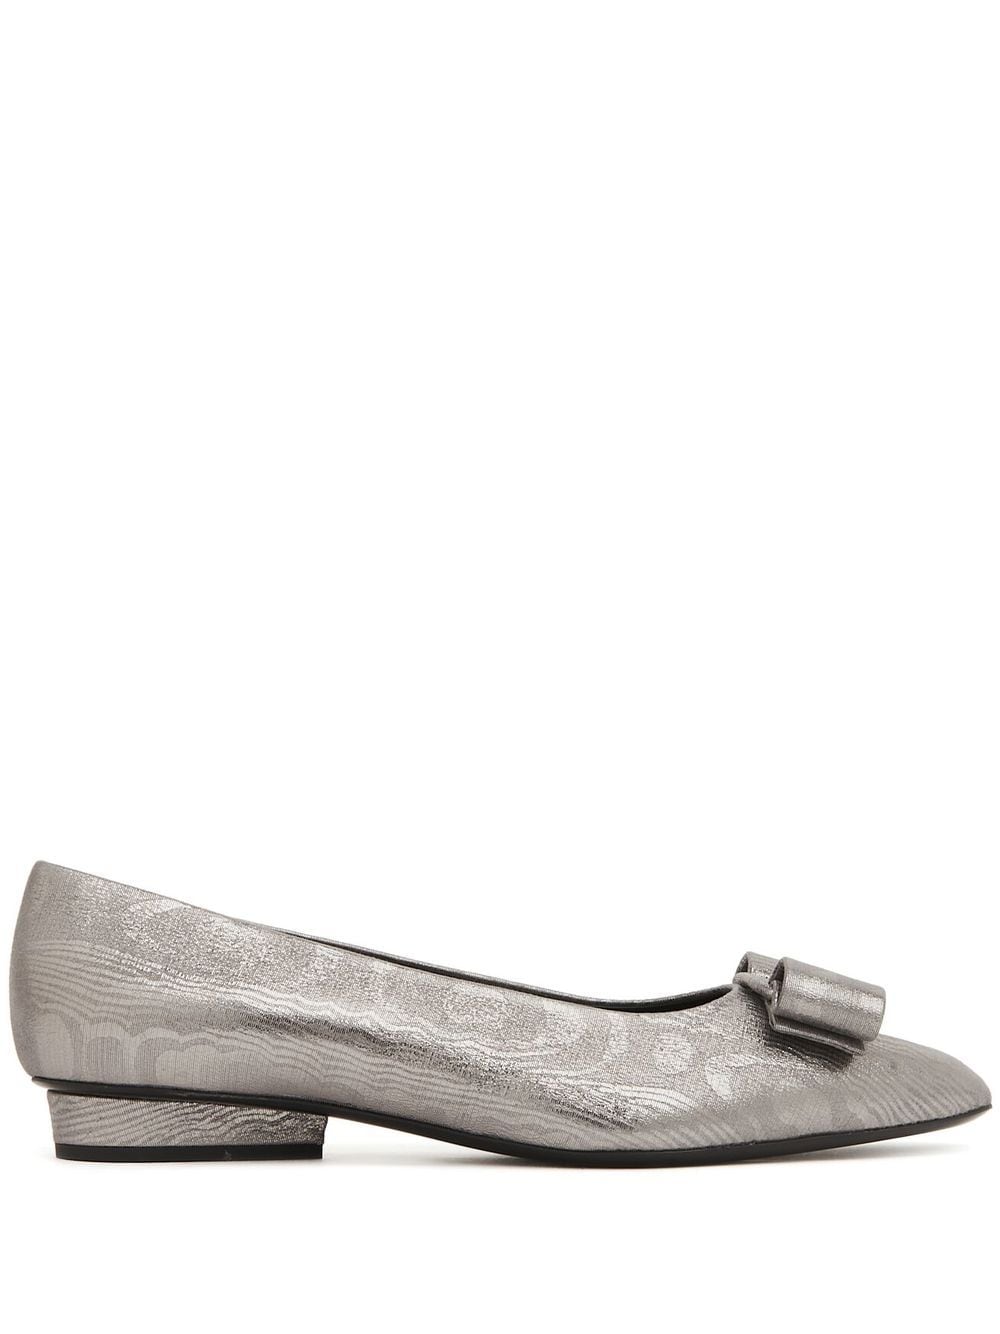 Ferragamo Viva ballet flat shoes - Grey